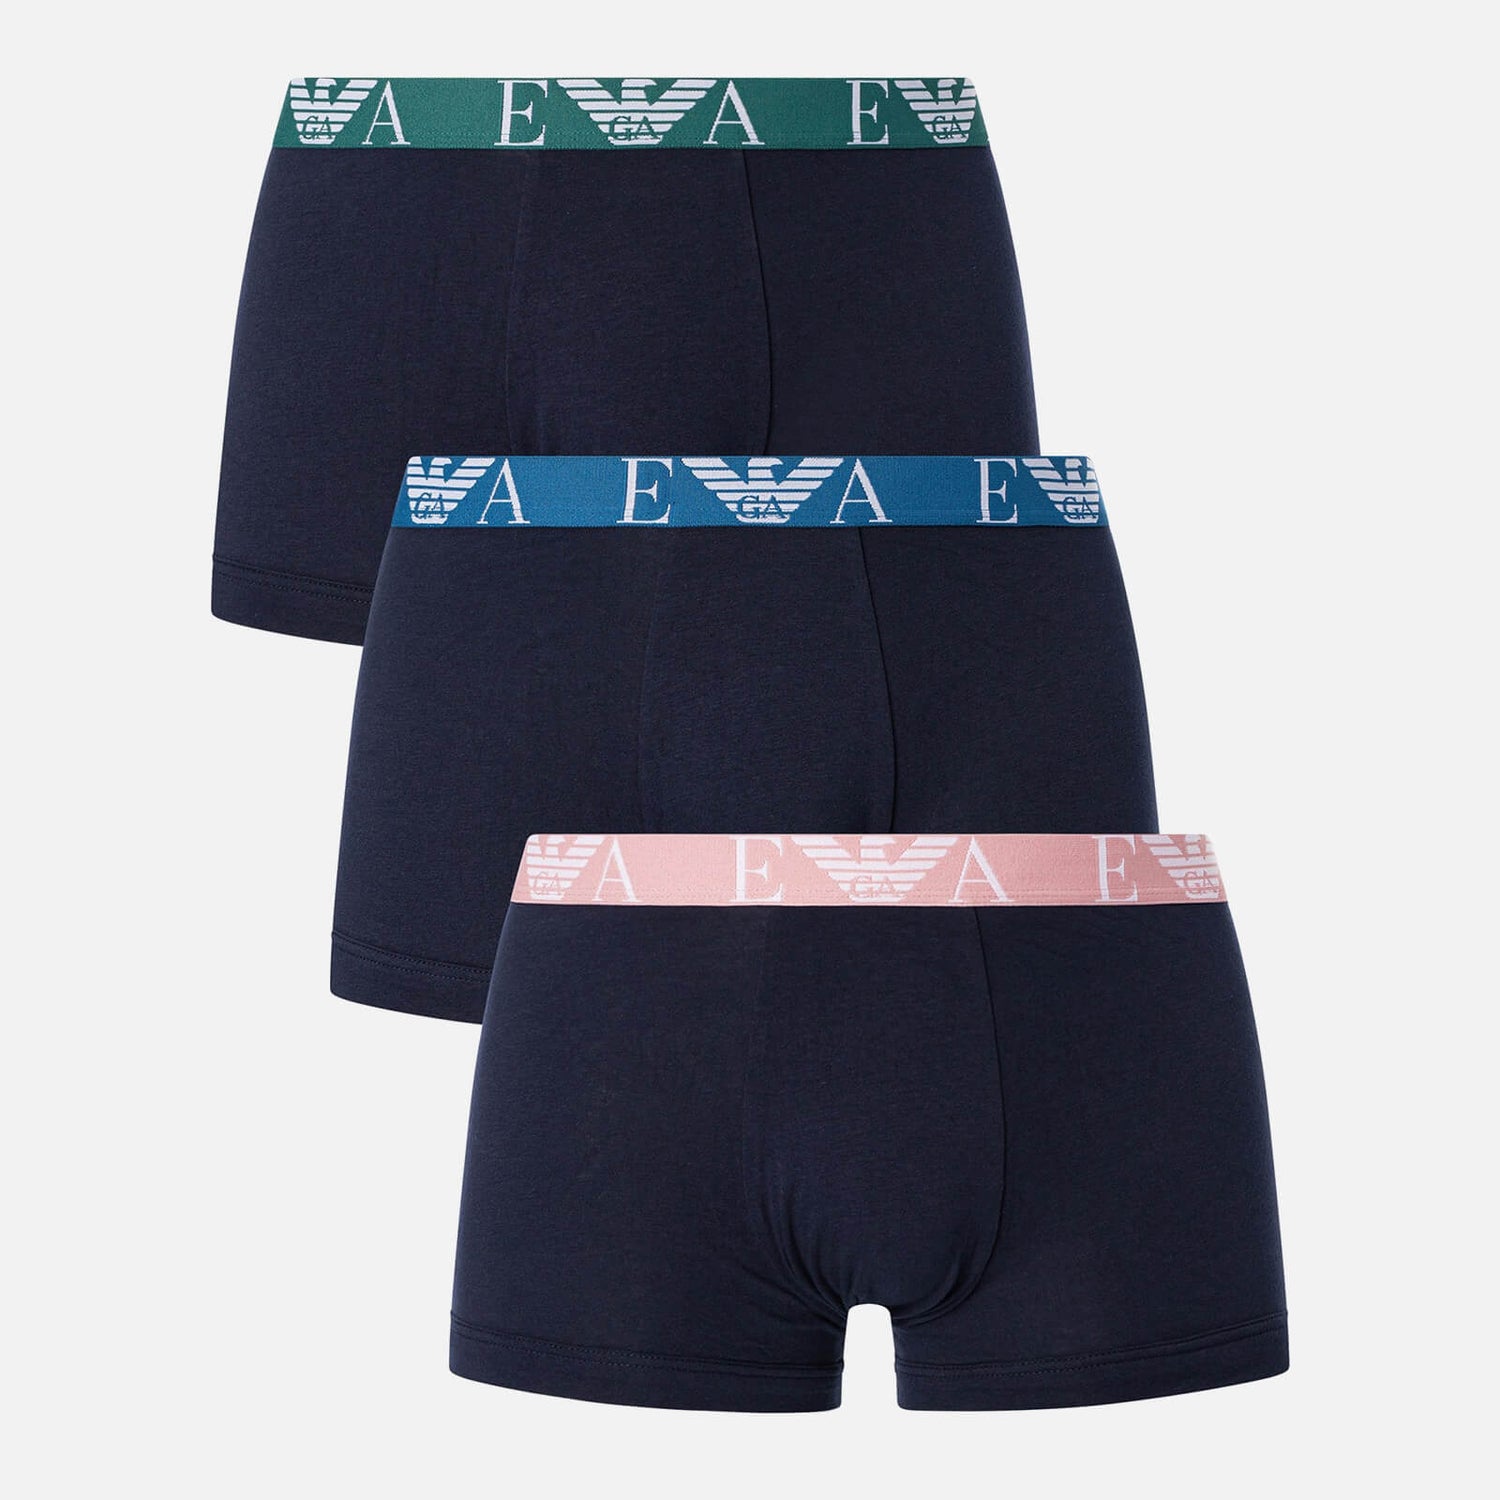 Emporio Armani Cotton-Blend 3 Pack Boxer Shorts